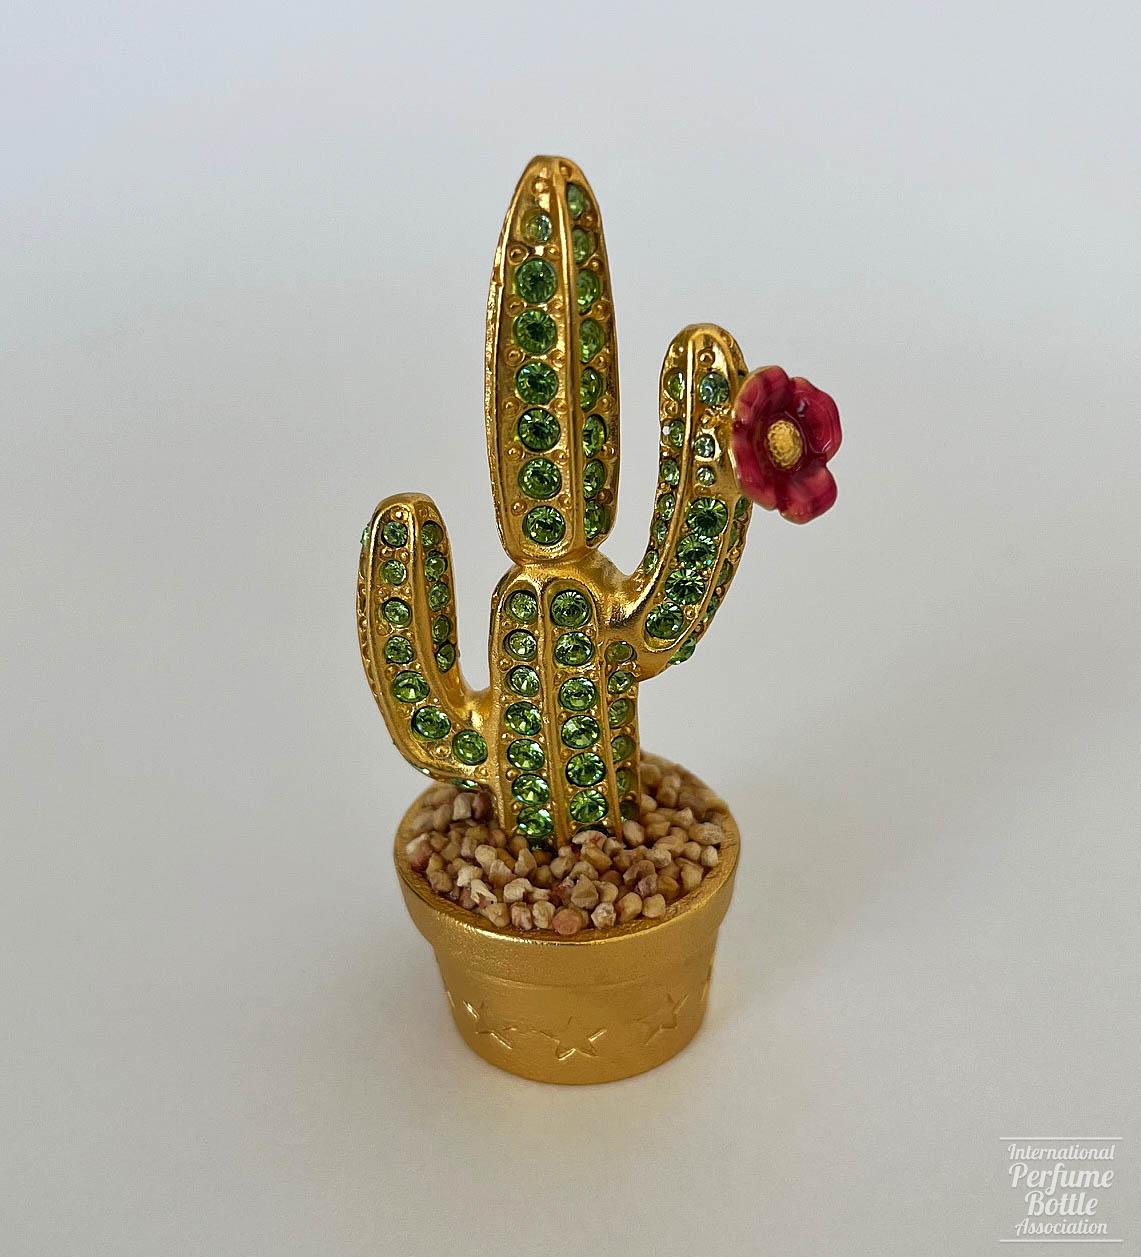 Crystal Cactus Solid Perfume by Estée Lauder